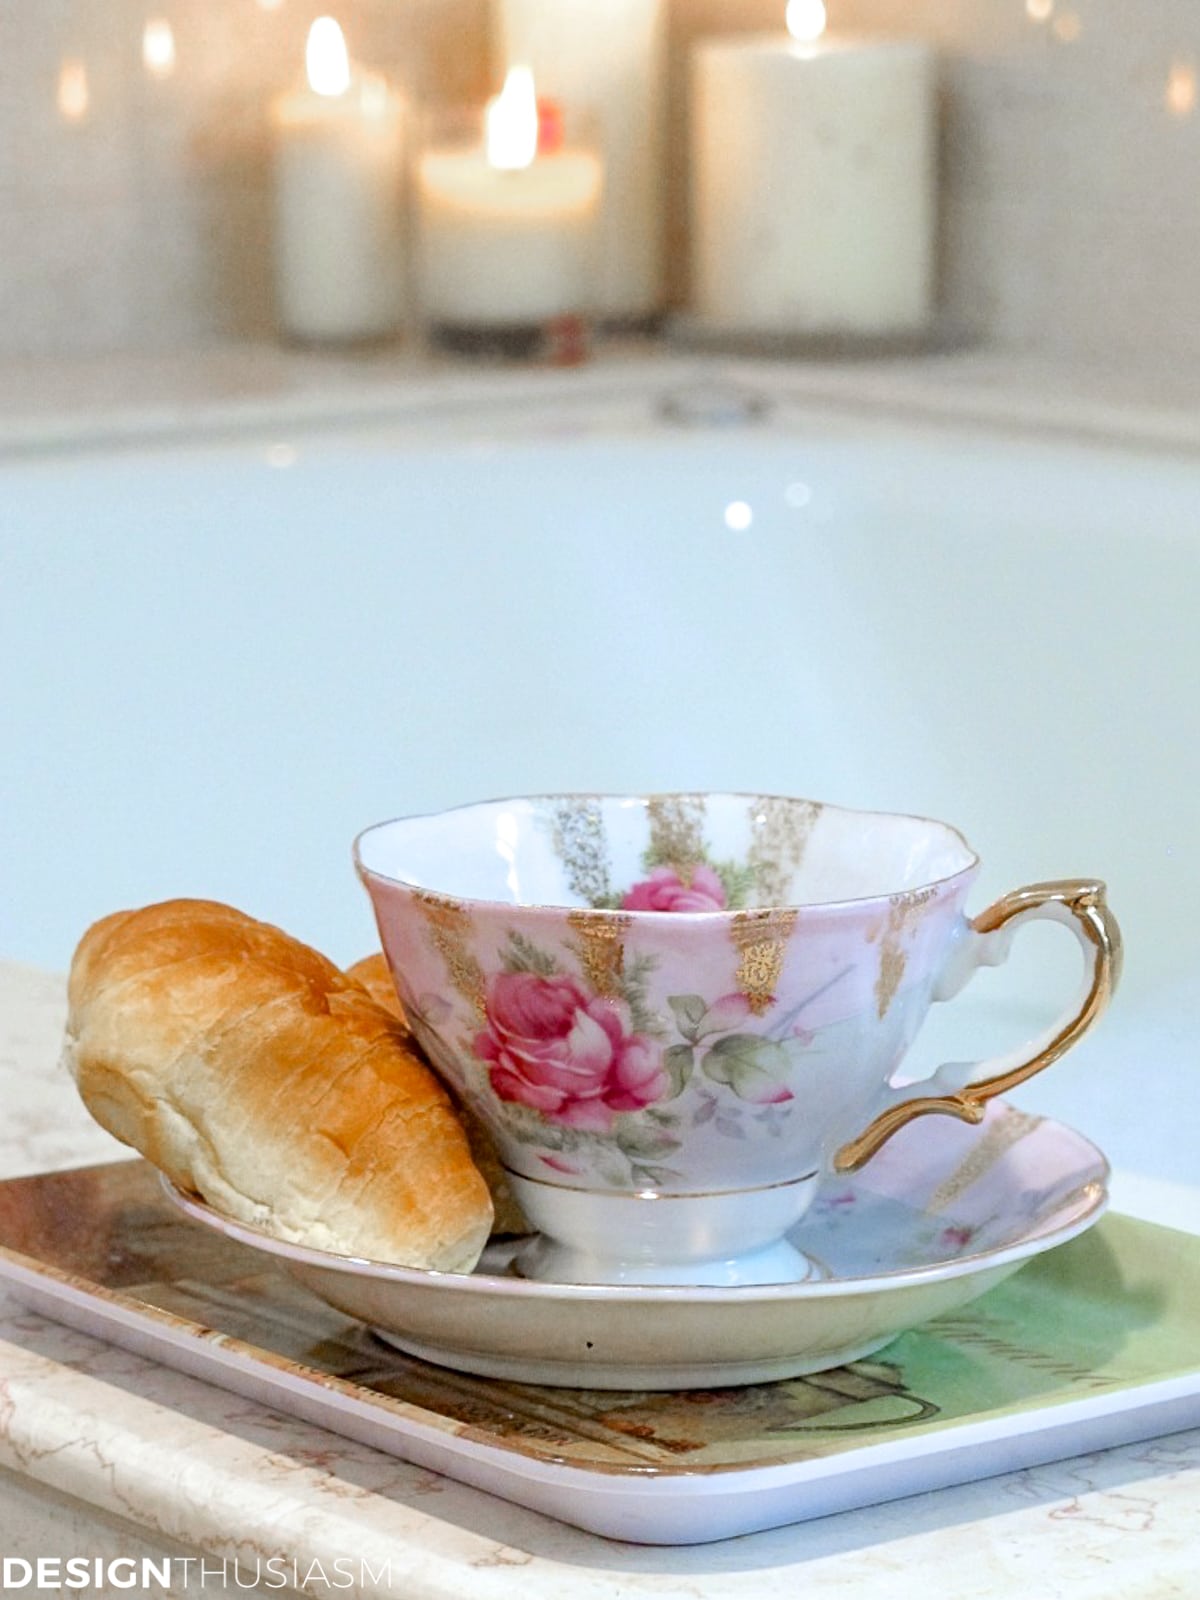 vintage teacups and plates on a tub surround